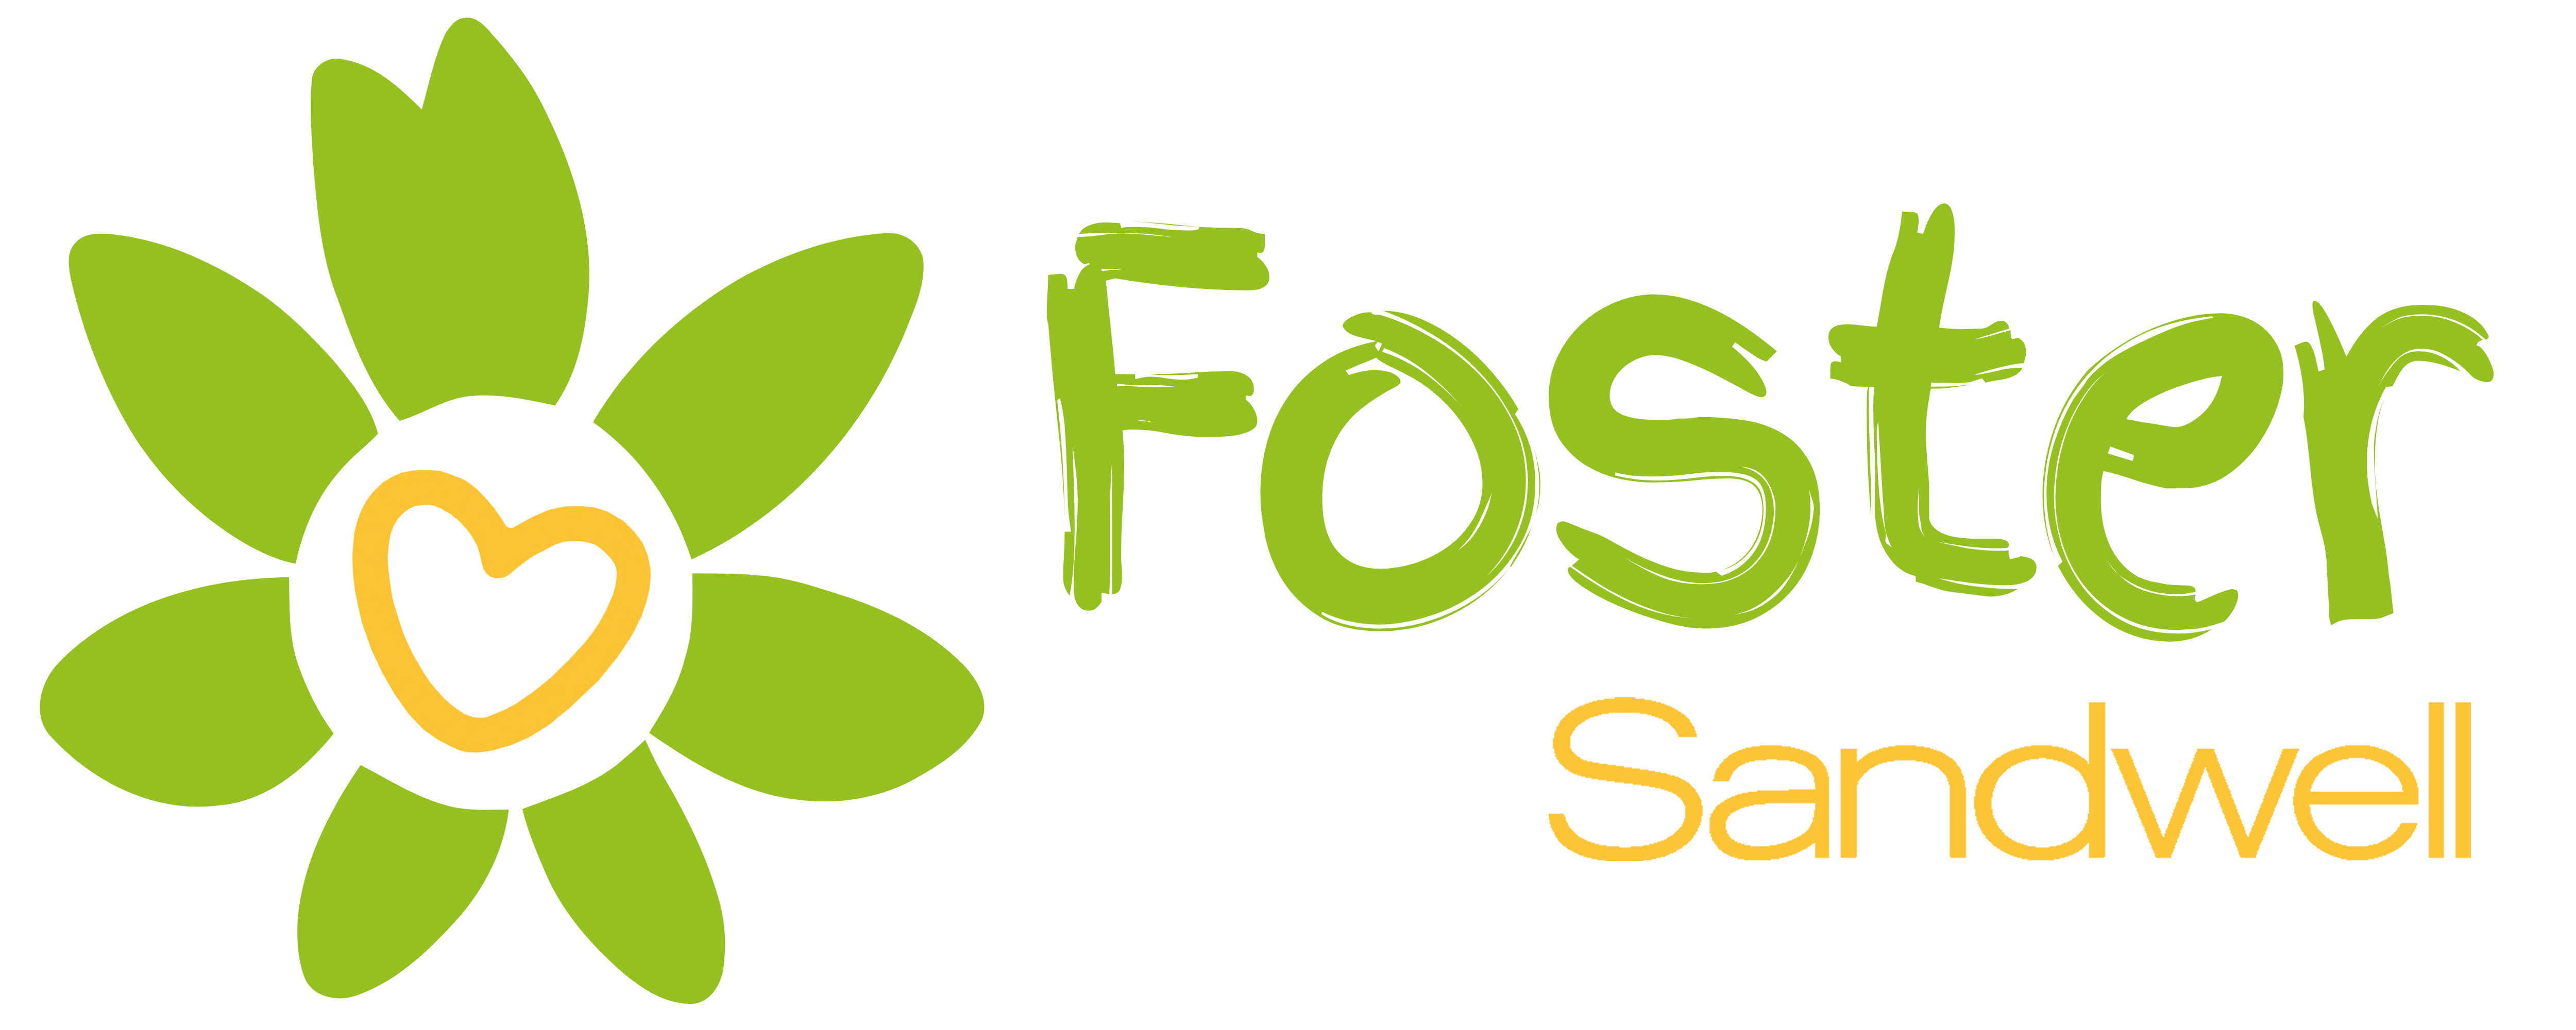 Foster Sandwell logo